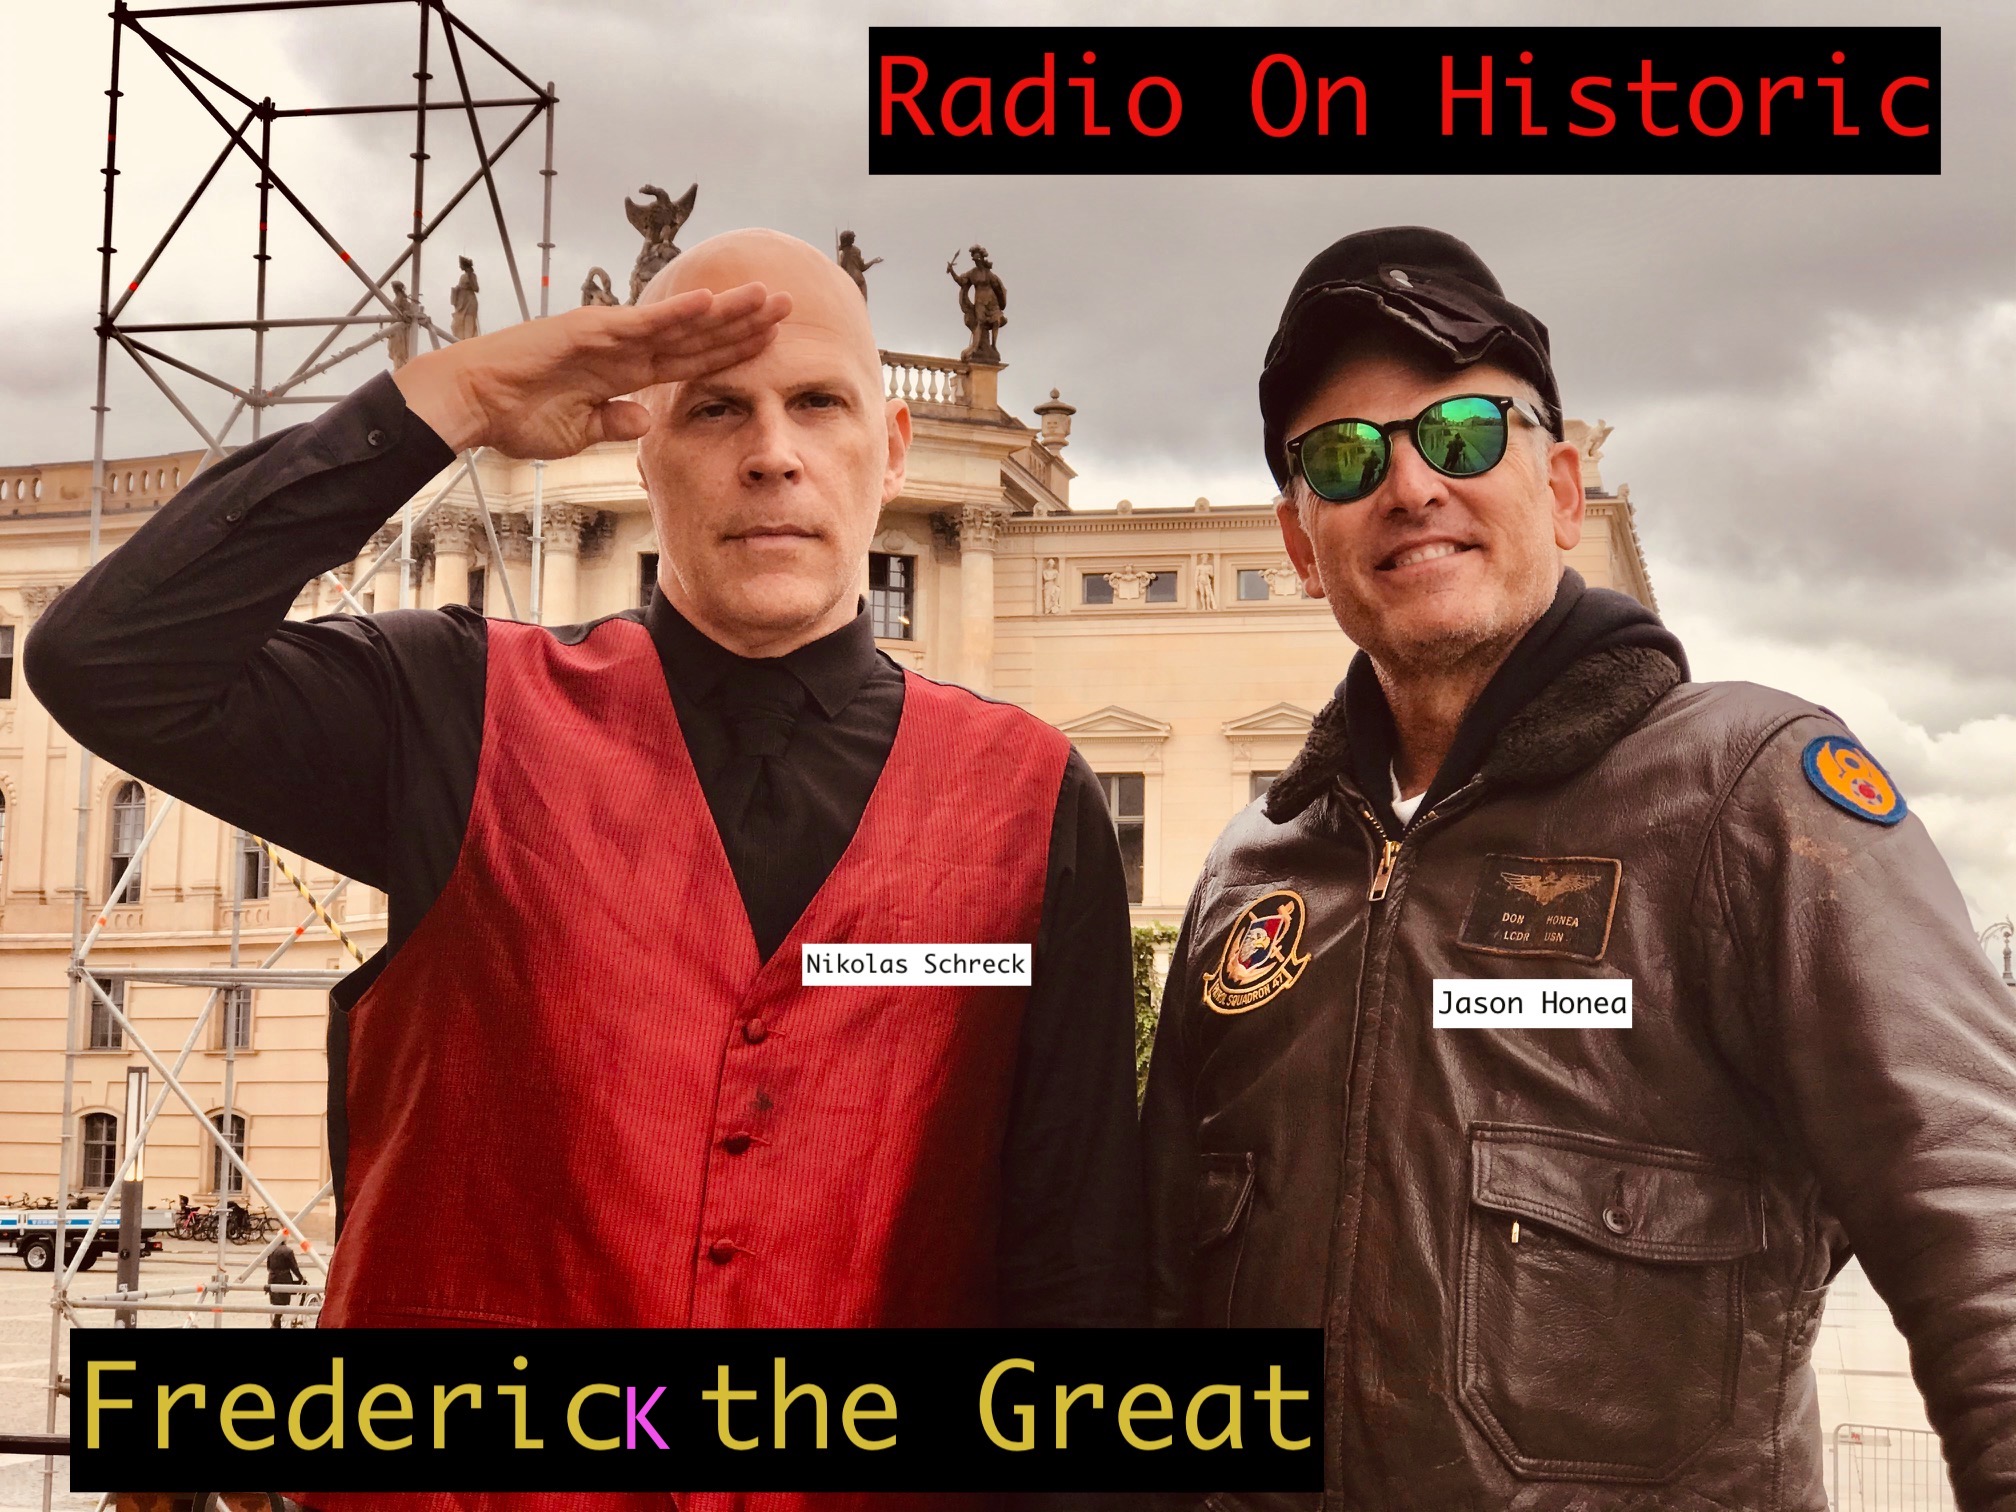 Radio On Historic – Nikolas Schreck and Jason Honea talk about Frederick the Great